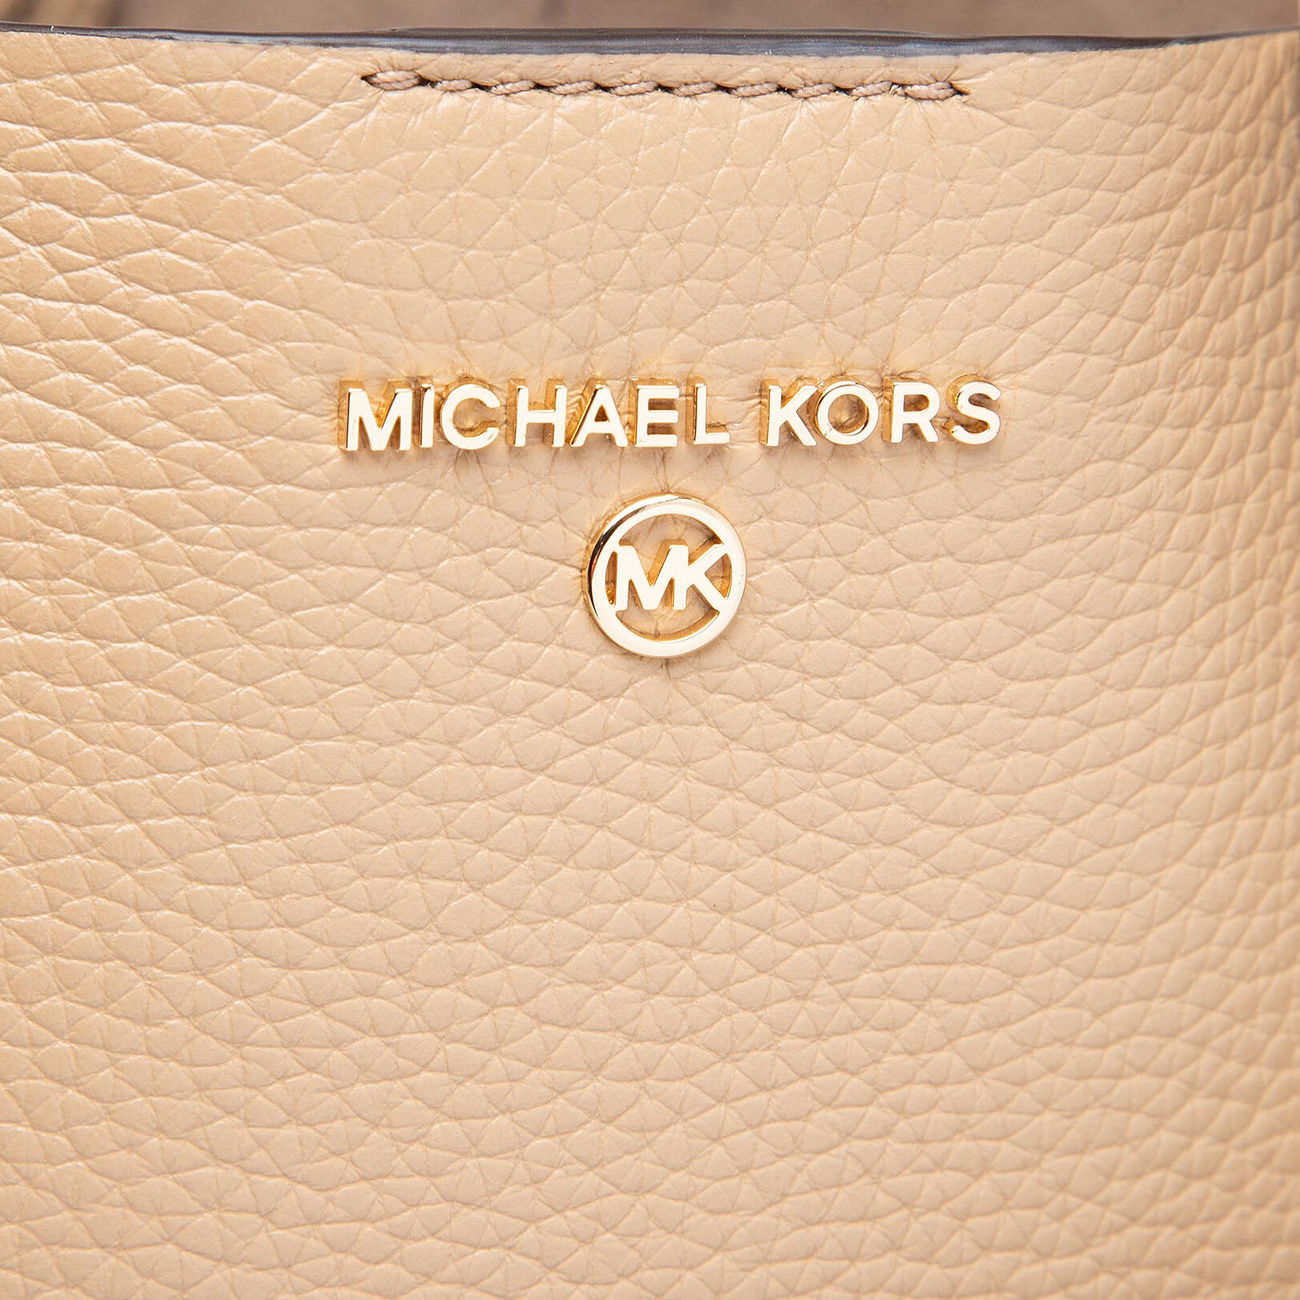 Buy Camel Brown Handbags for Women by Michael Kors Online